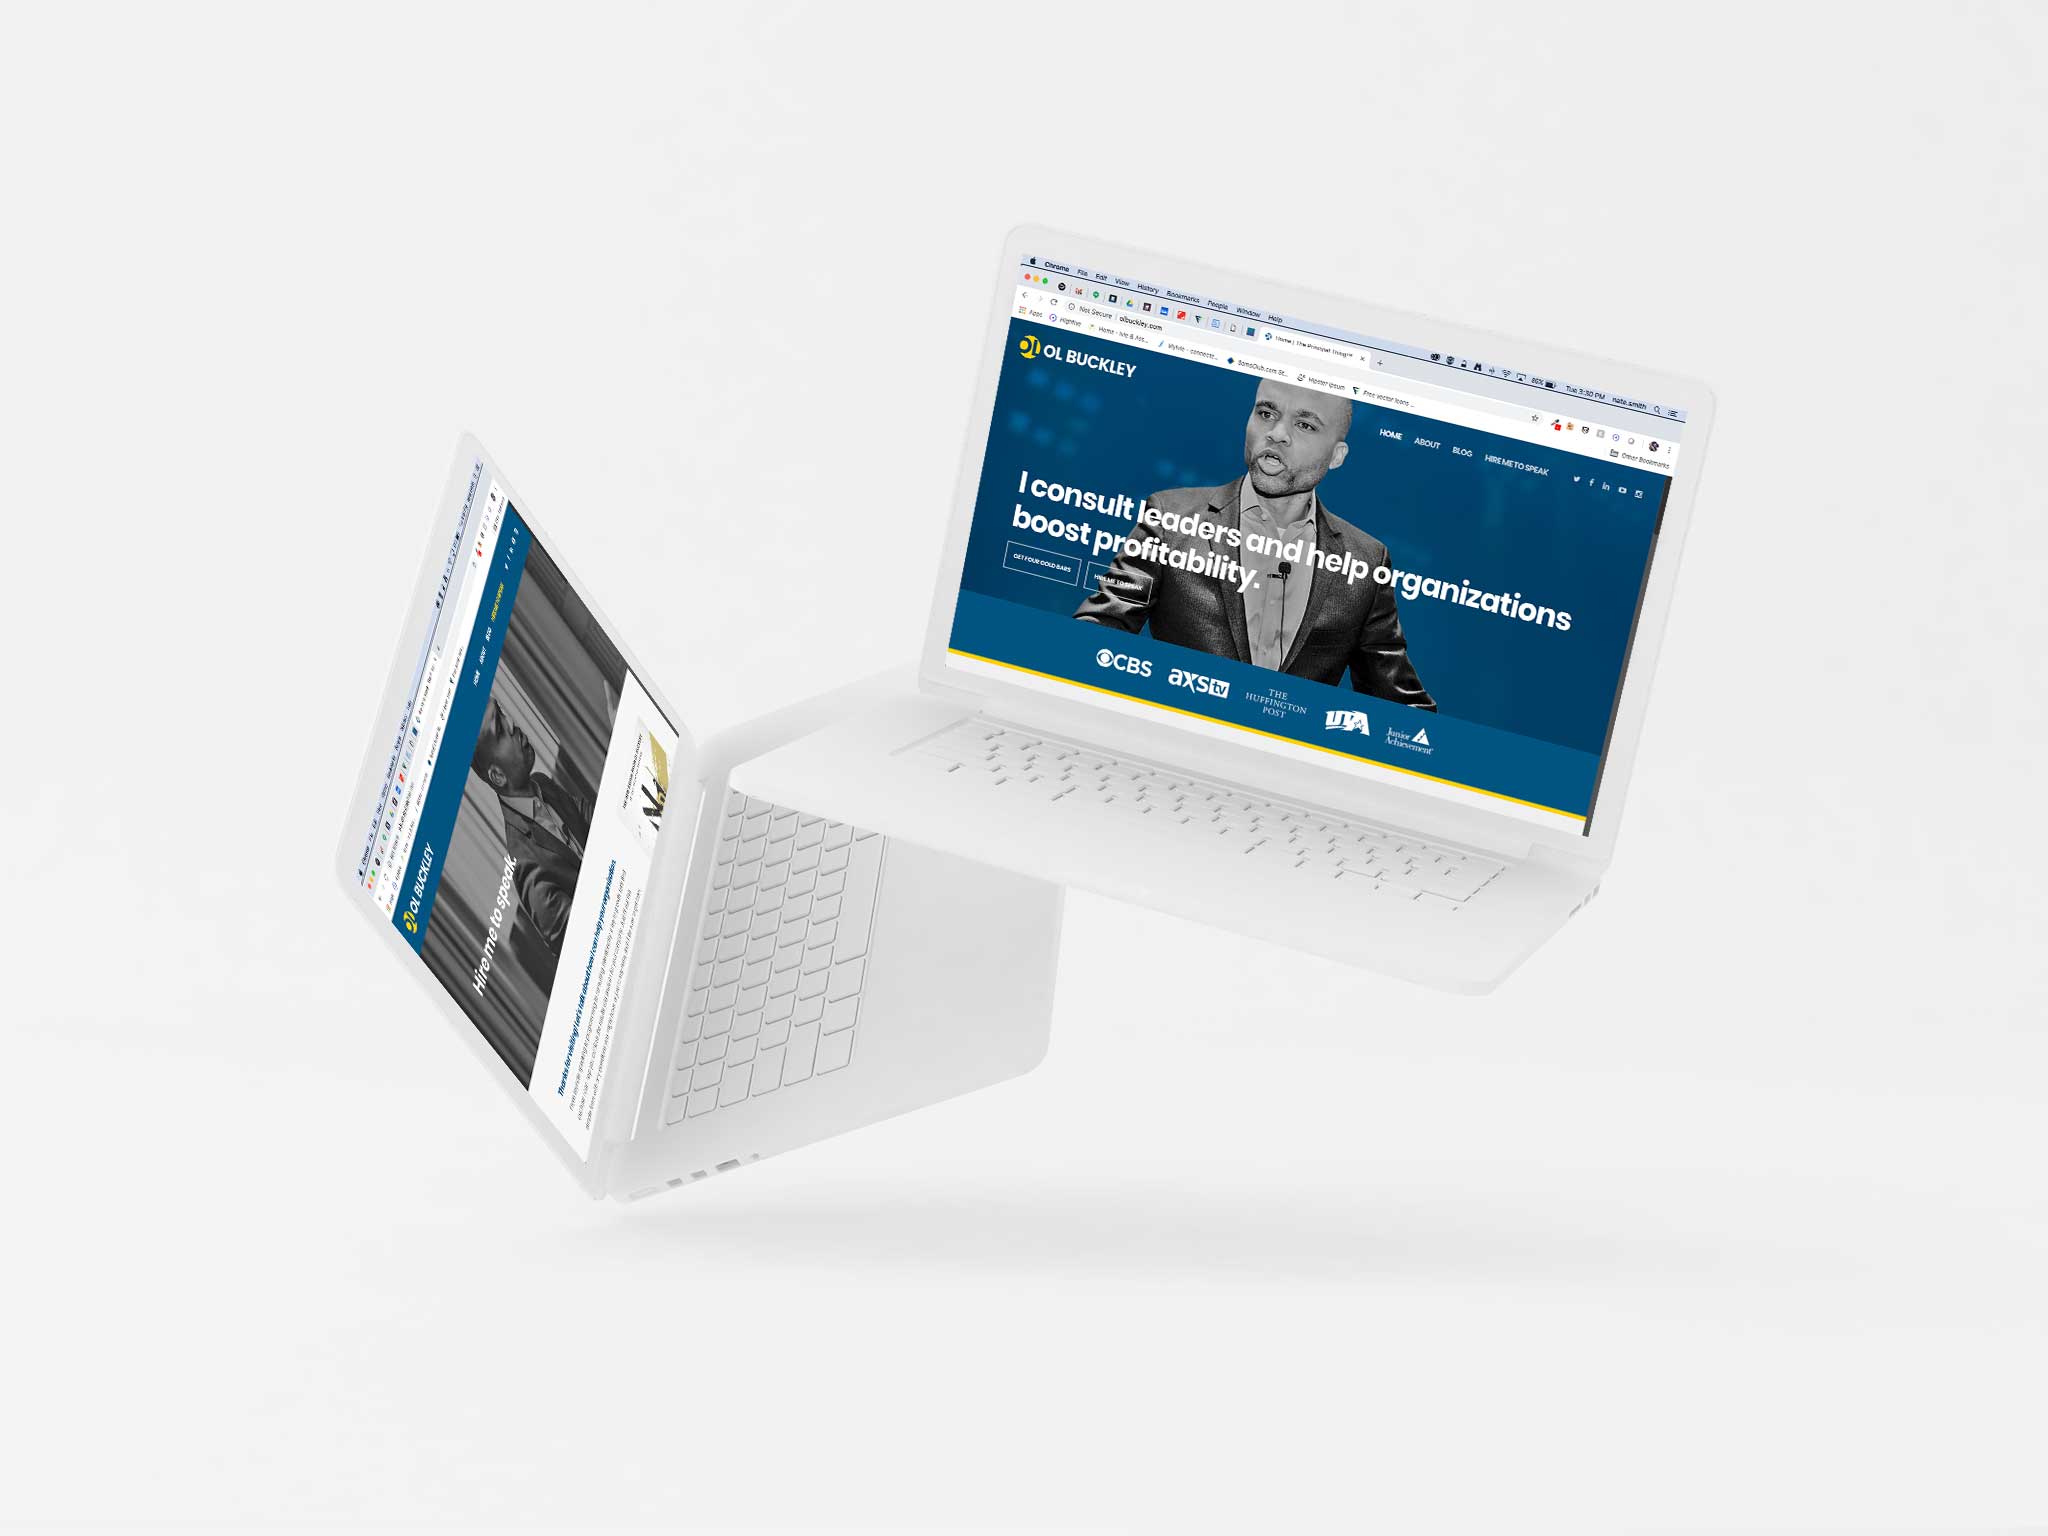 OL Buckley Website Design Mockups In White Clay MacBook Pros | Enormous Elephant